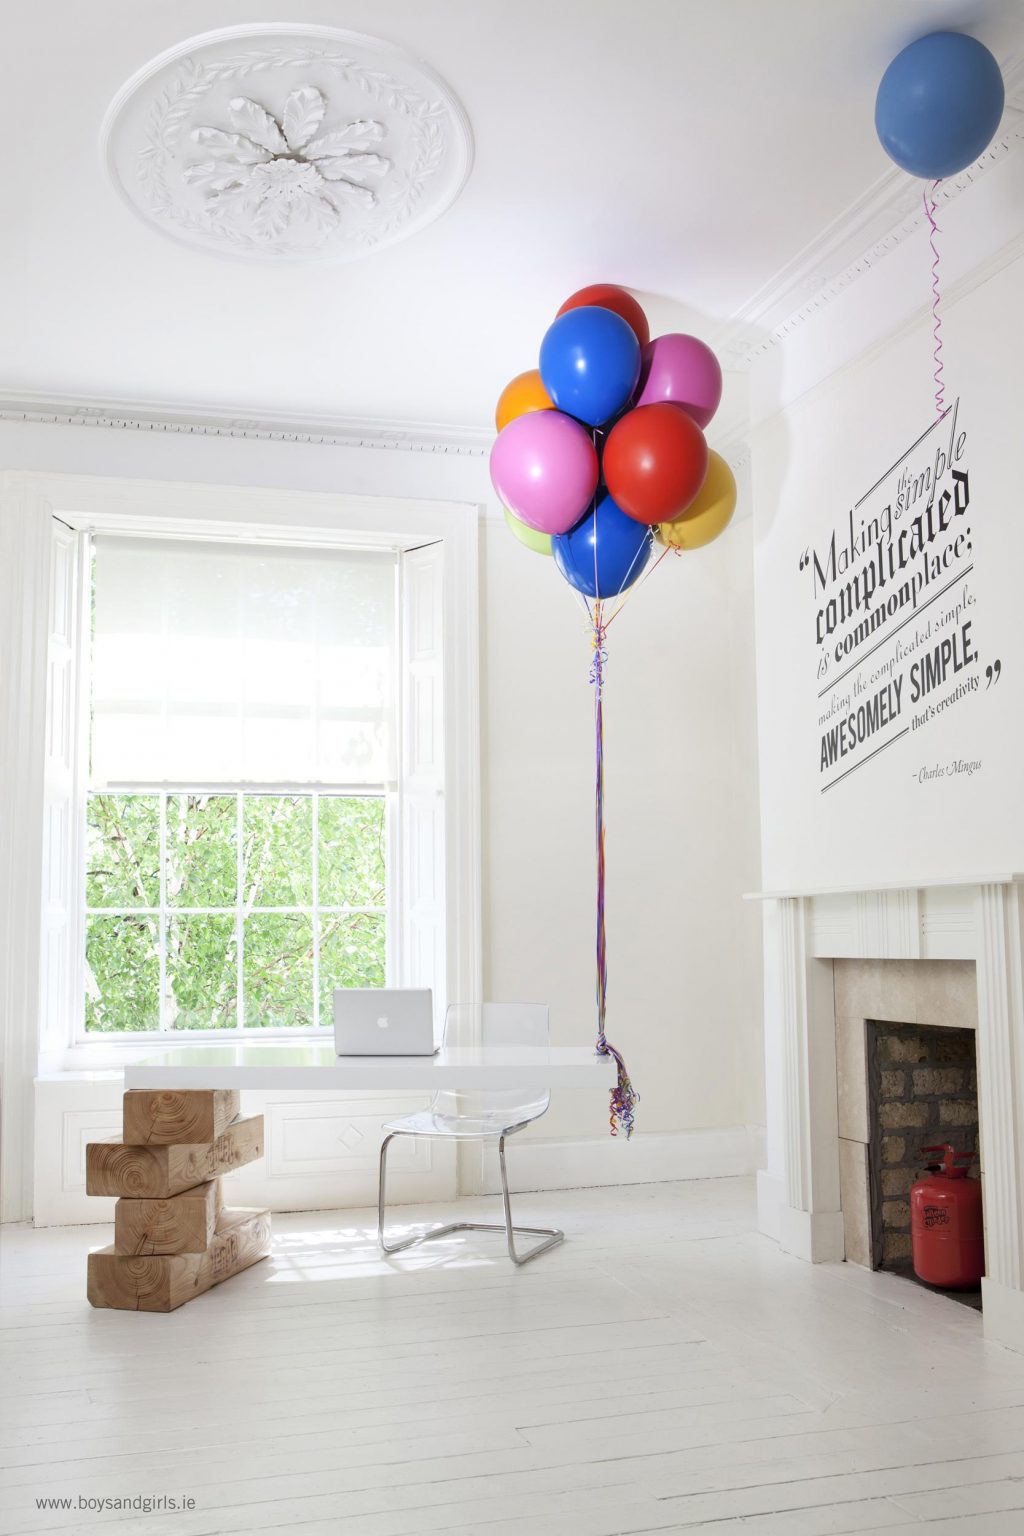 Top 5 designers home home office decor ideas to inspire you